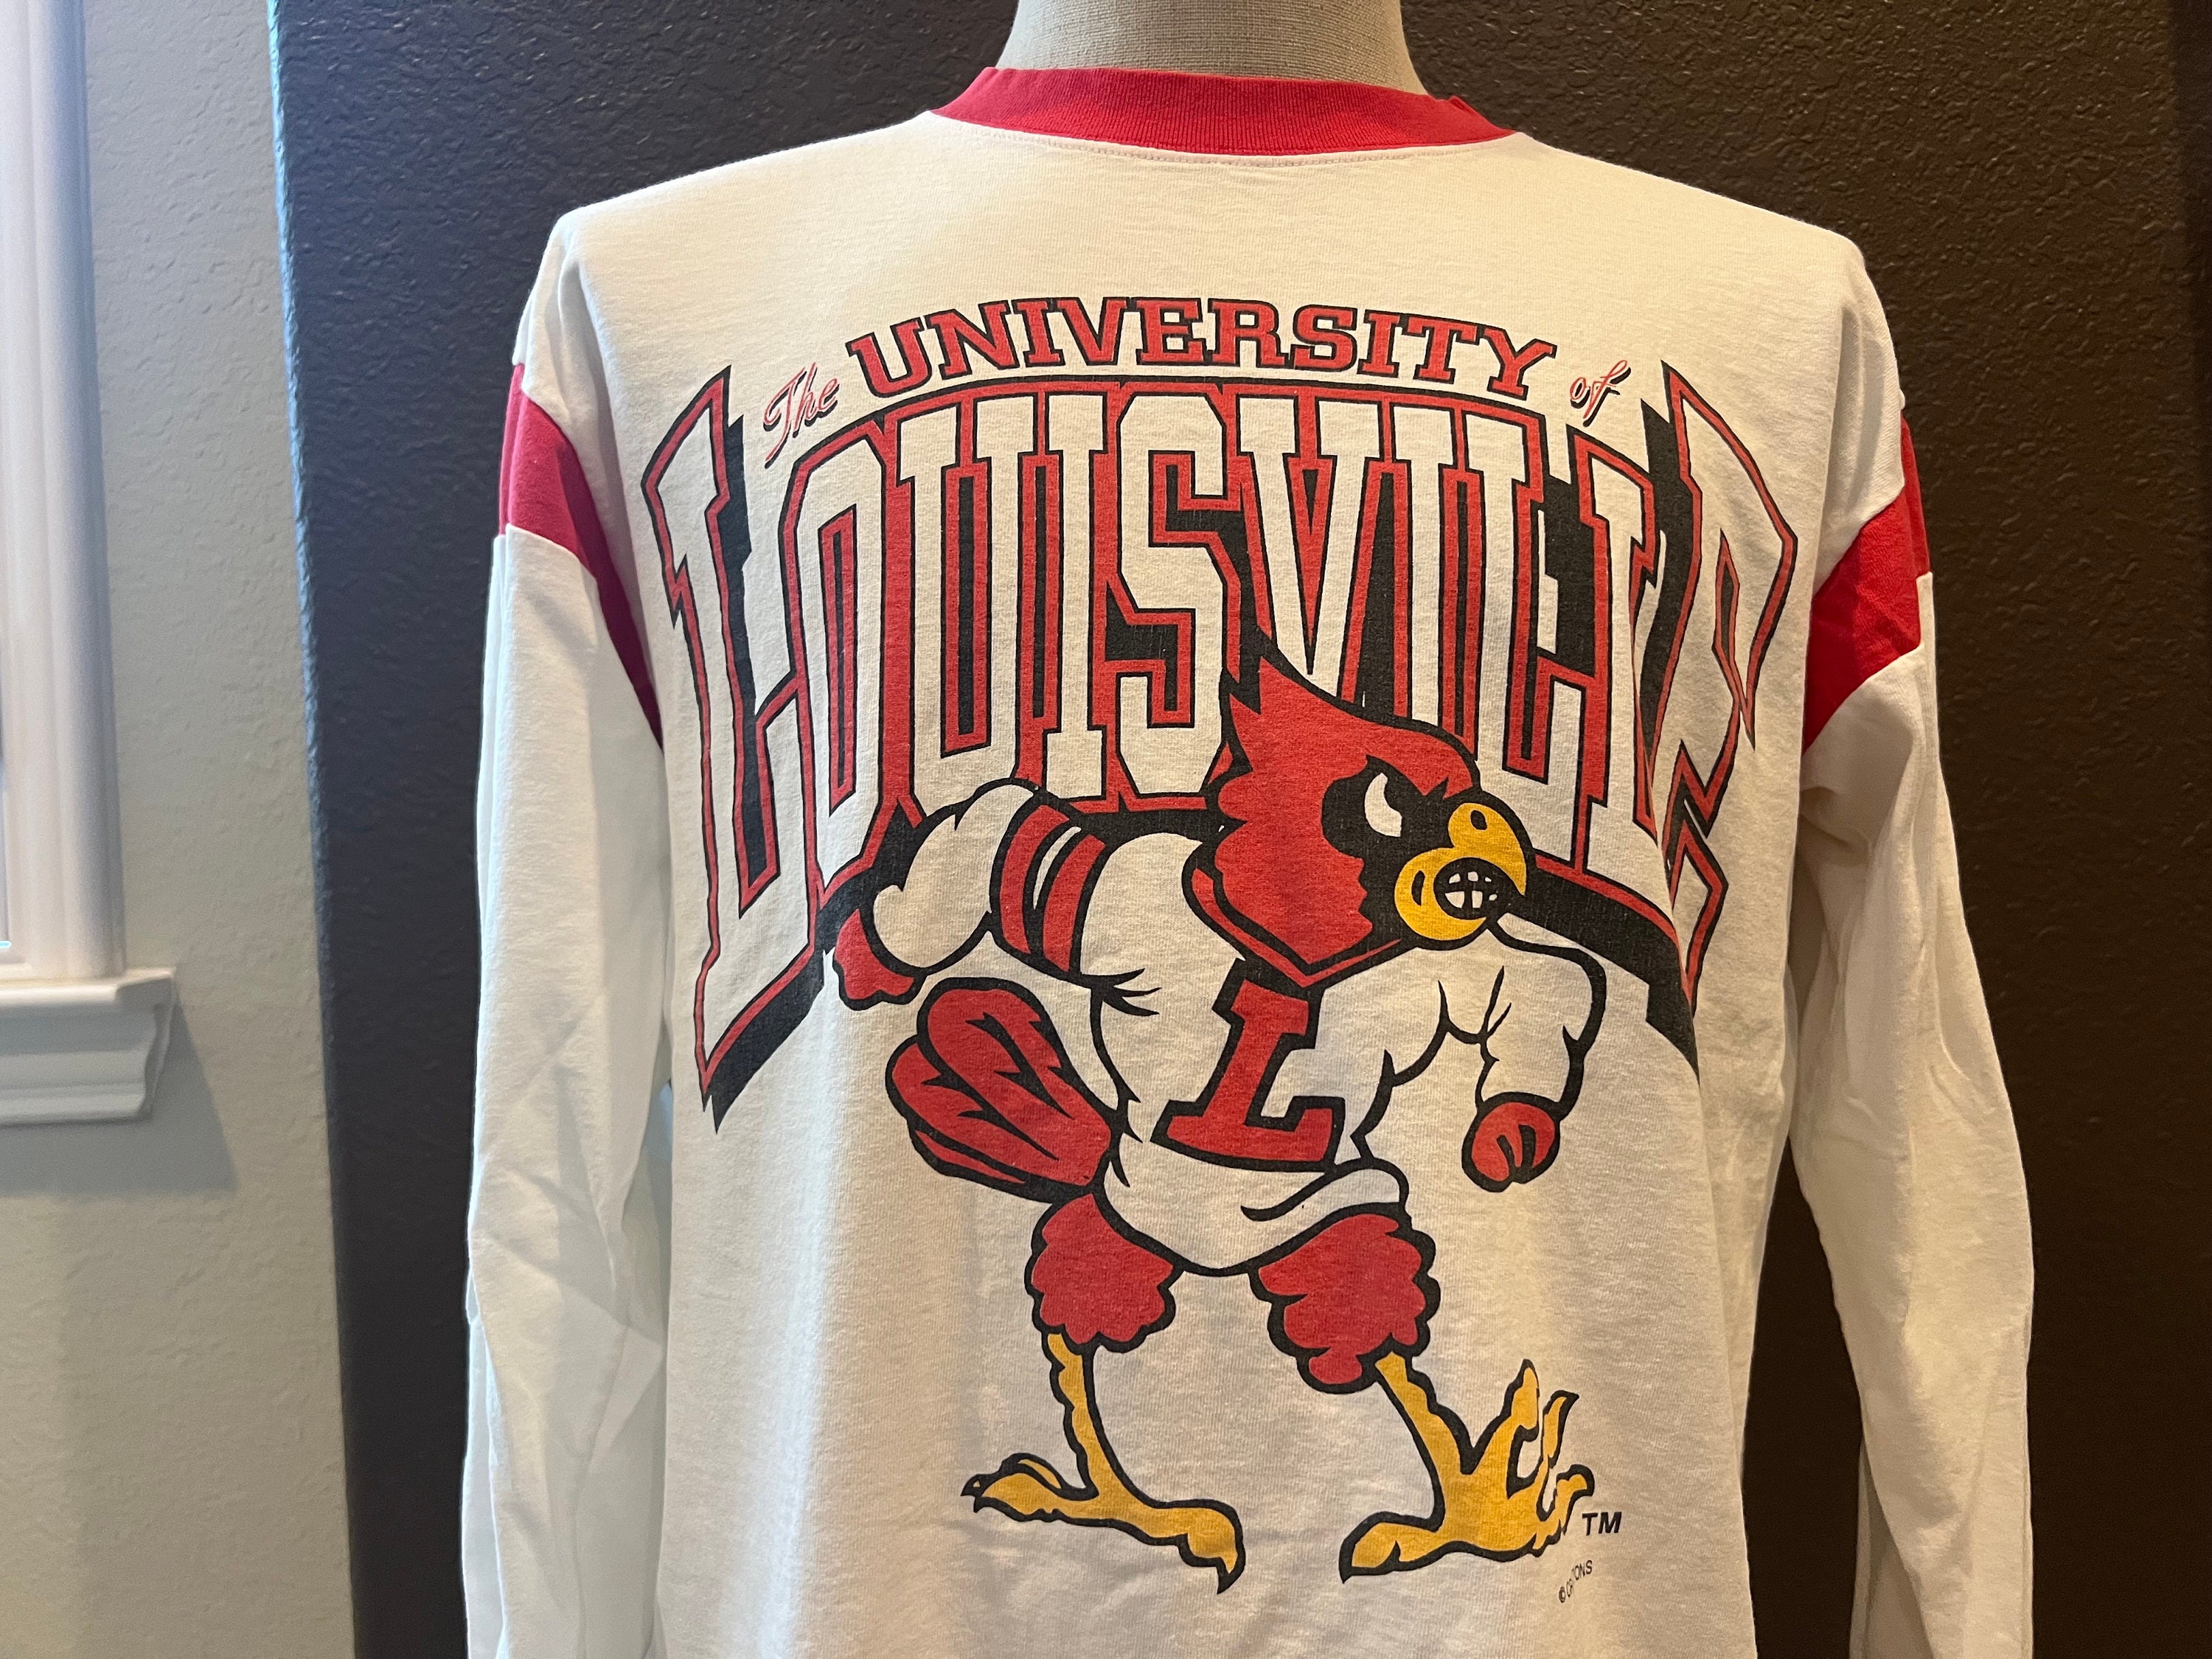 Vintage Louisville Cardinals Sweatshirt Mens XL Red Crewneck 90's